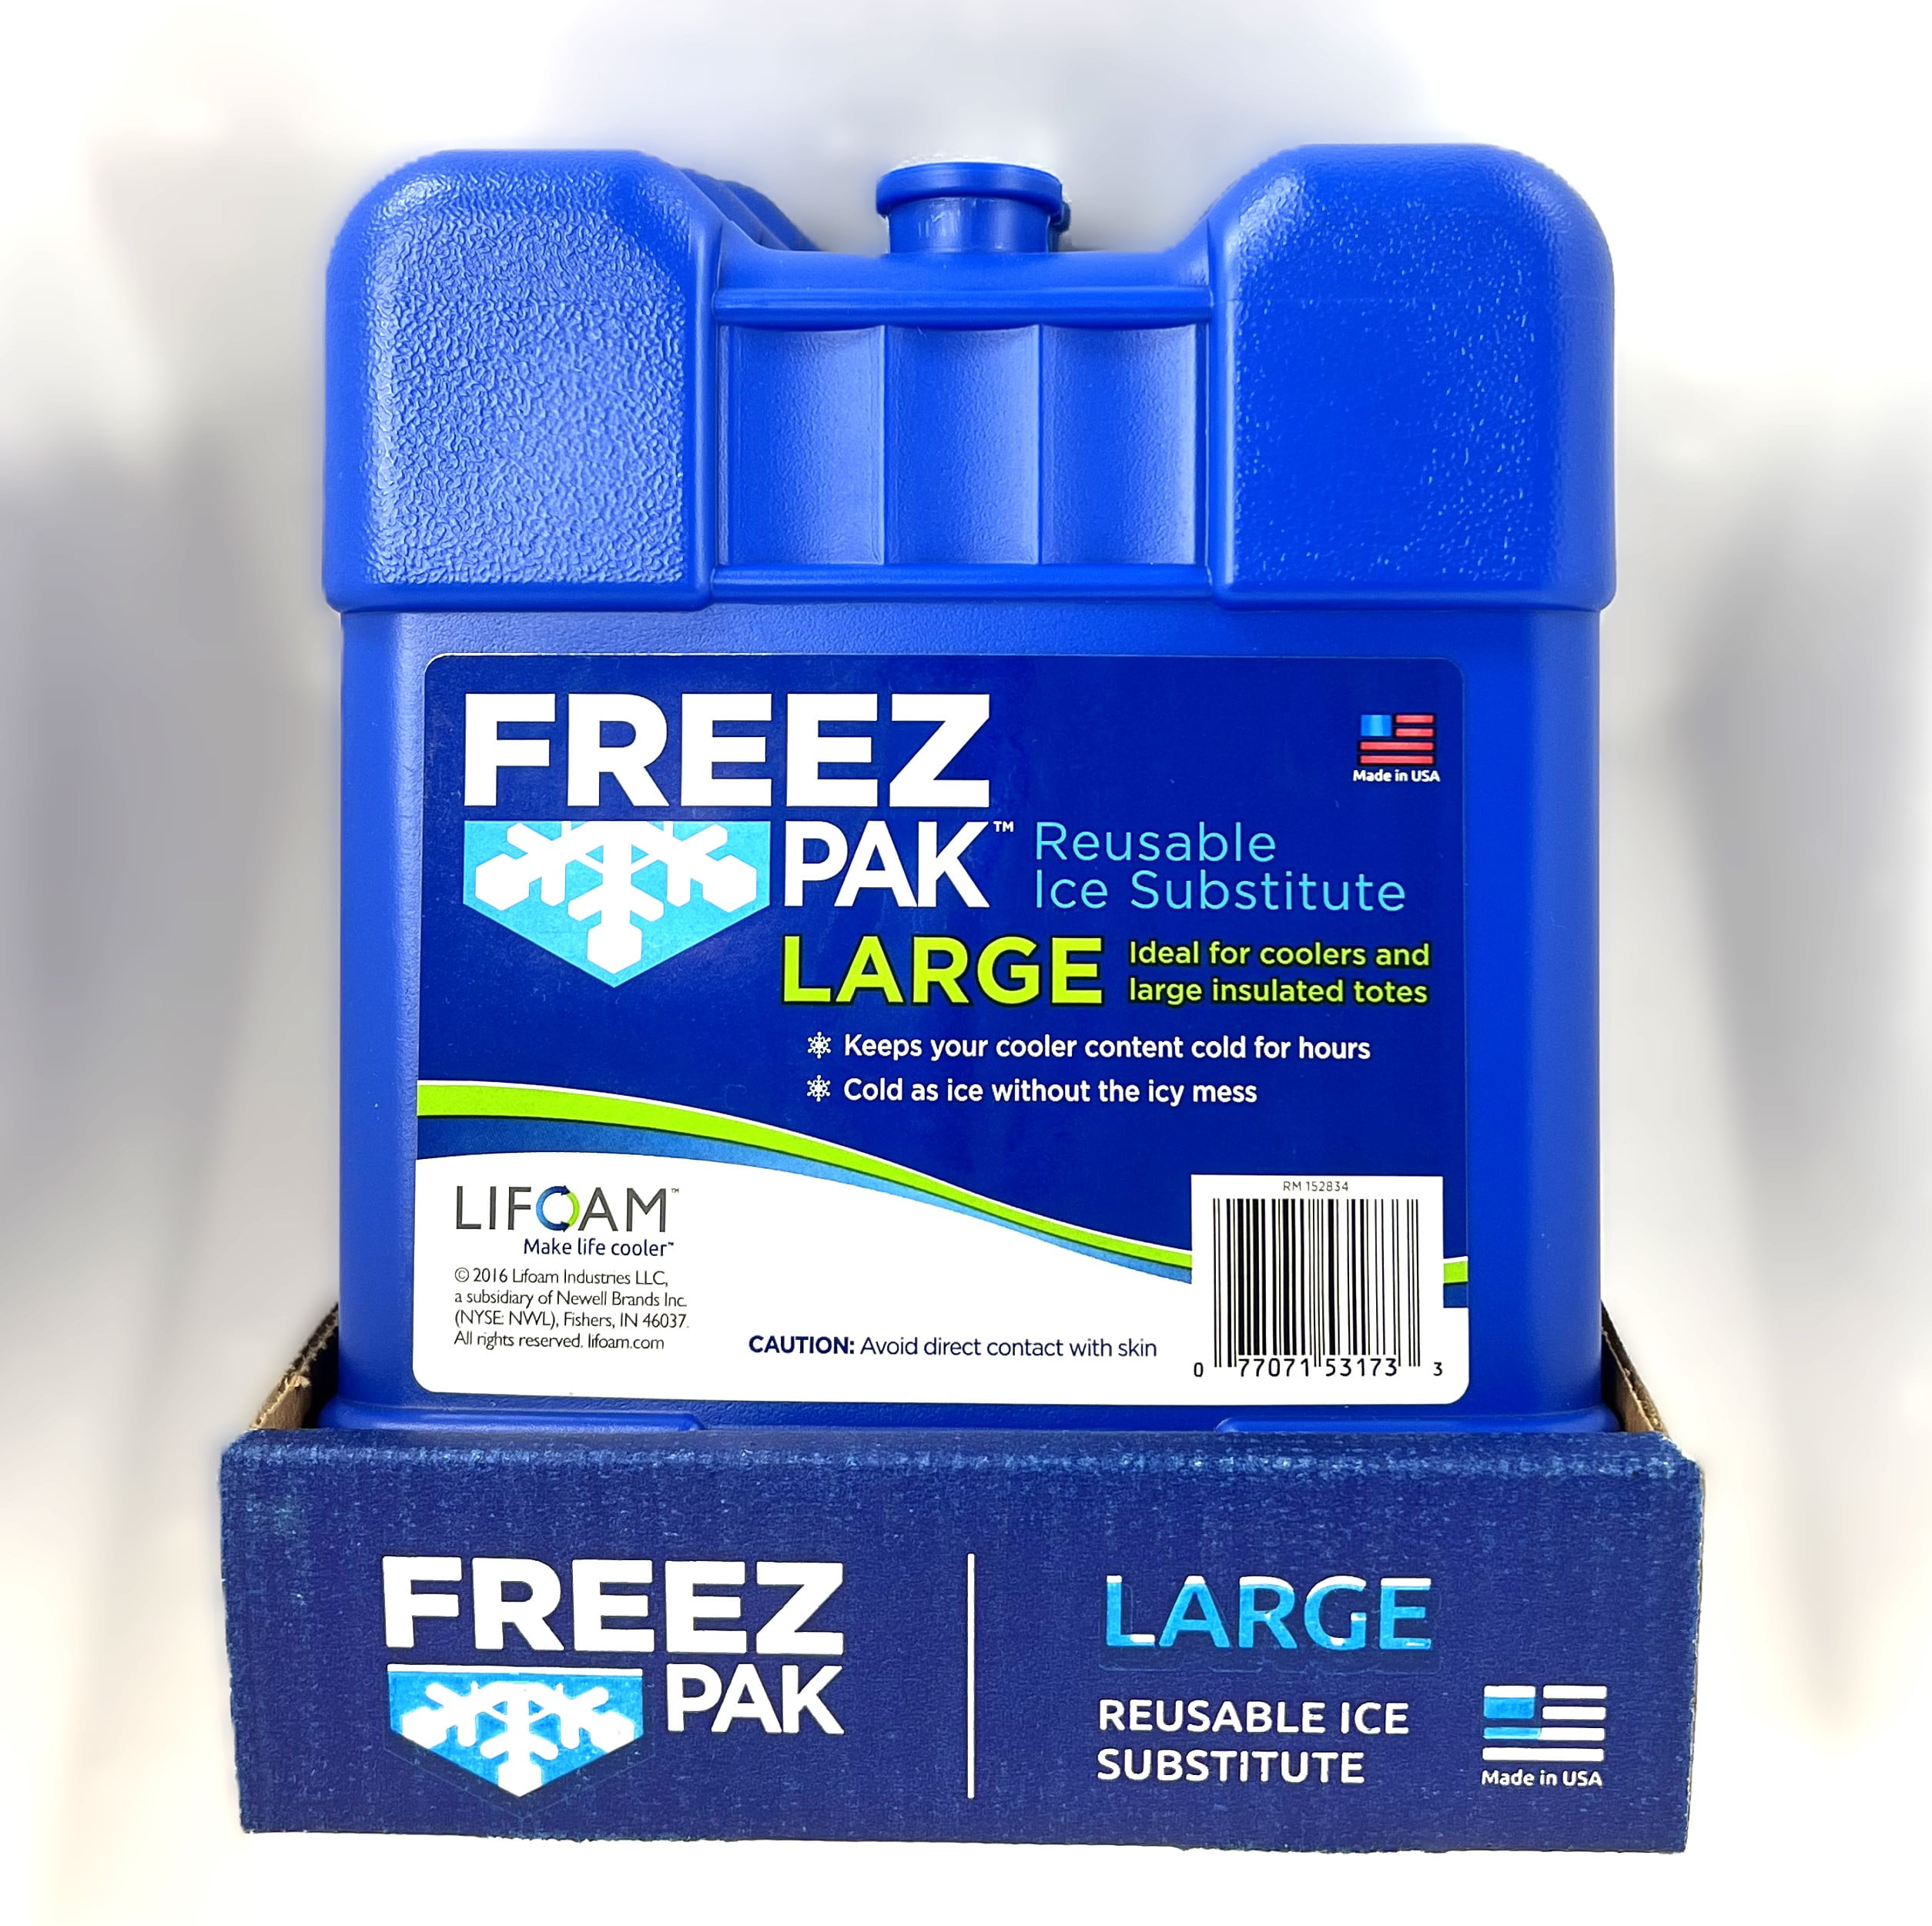 Ezprogear Large Cool 2 Packs Reusable & Freezable Ice Packs for